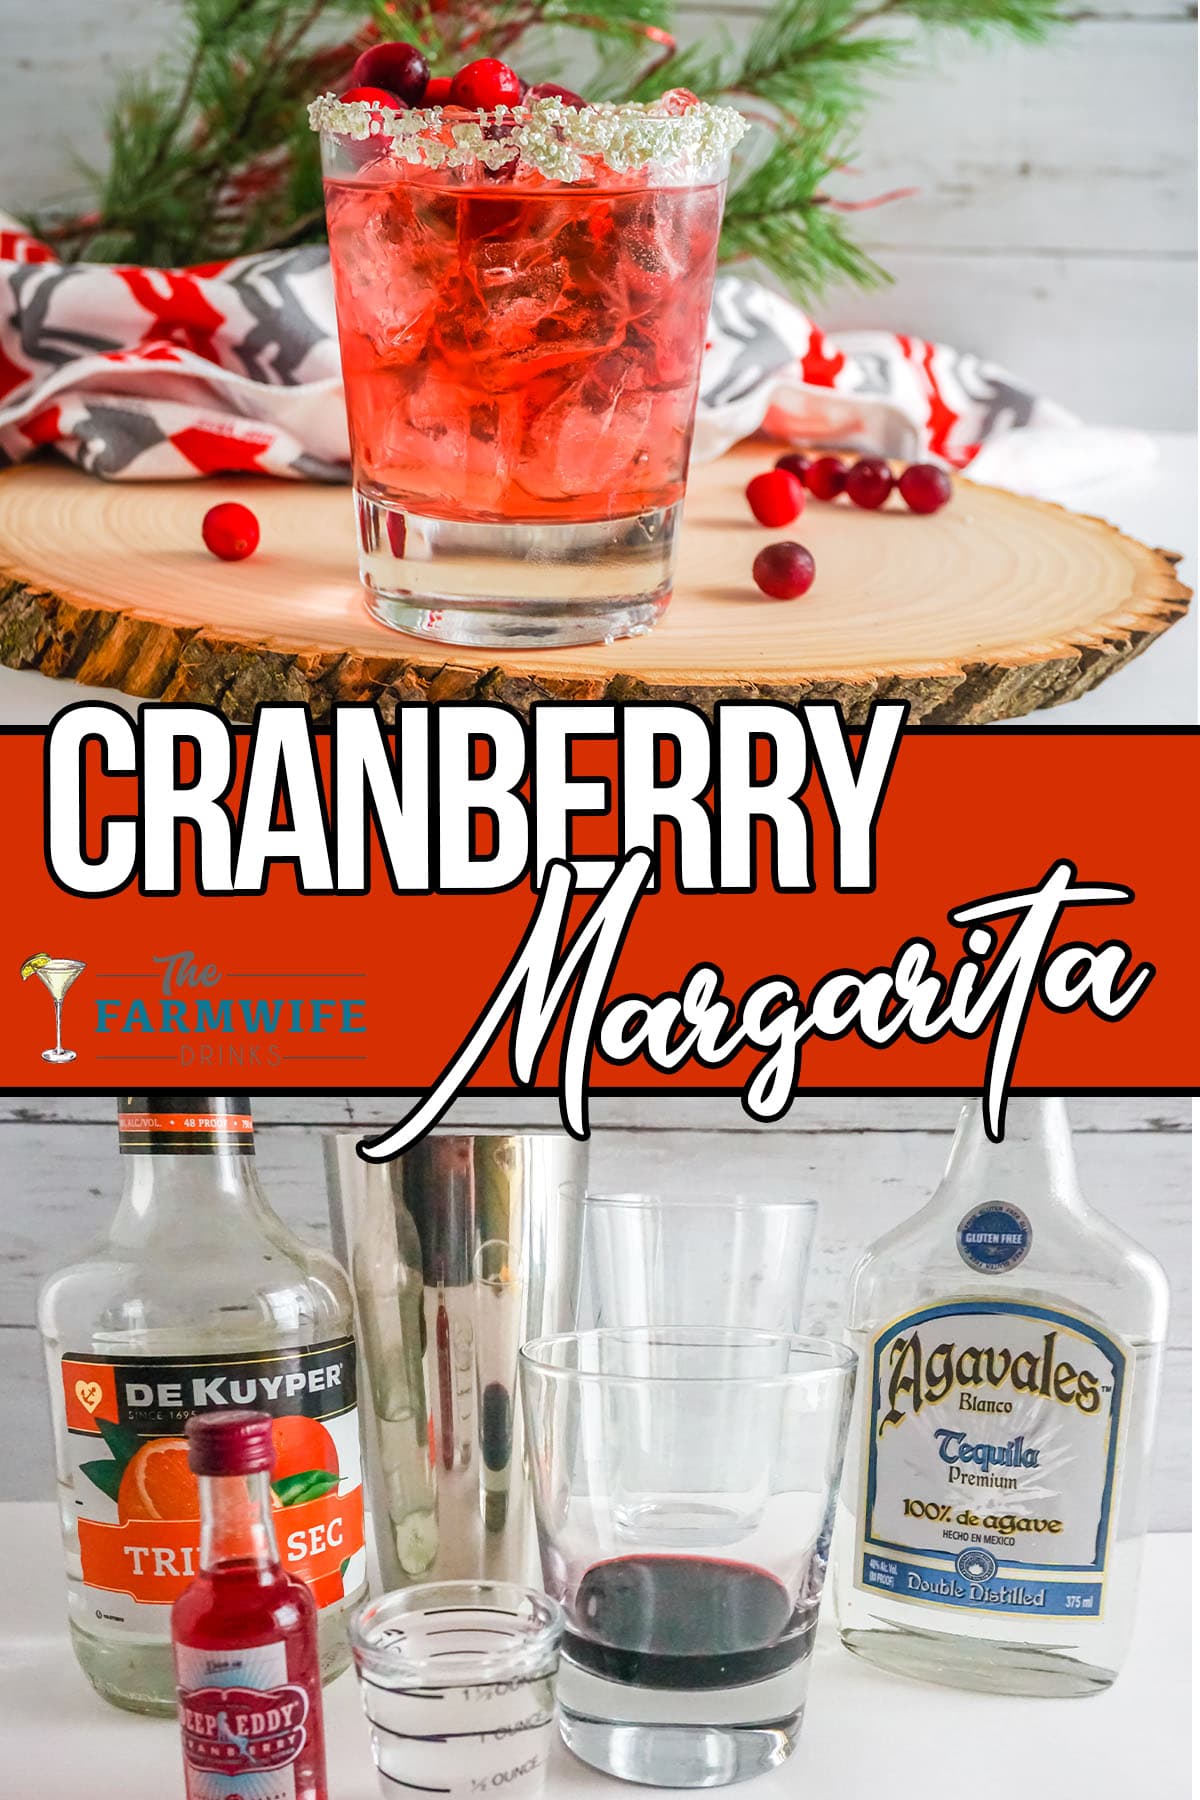 5 ingredients, for Cranberry Margarita